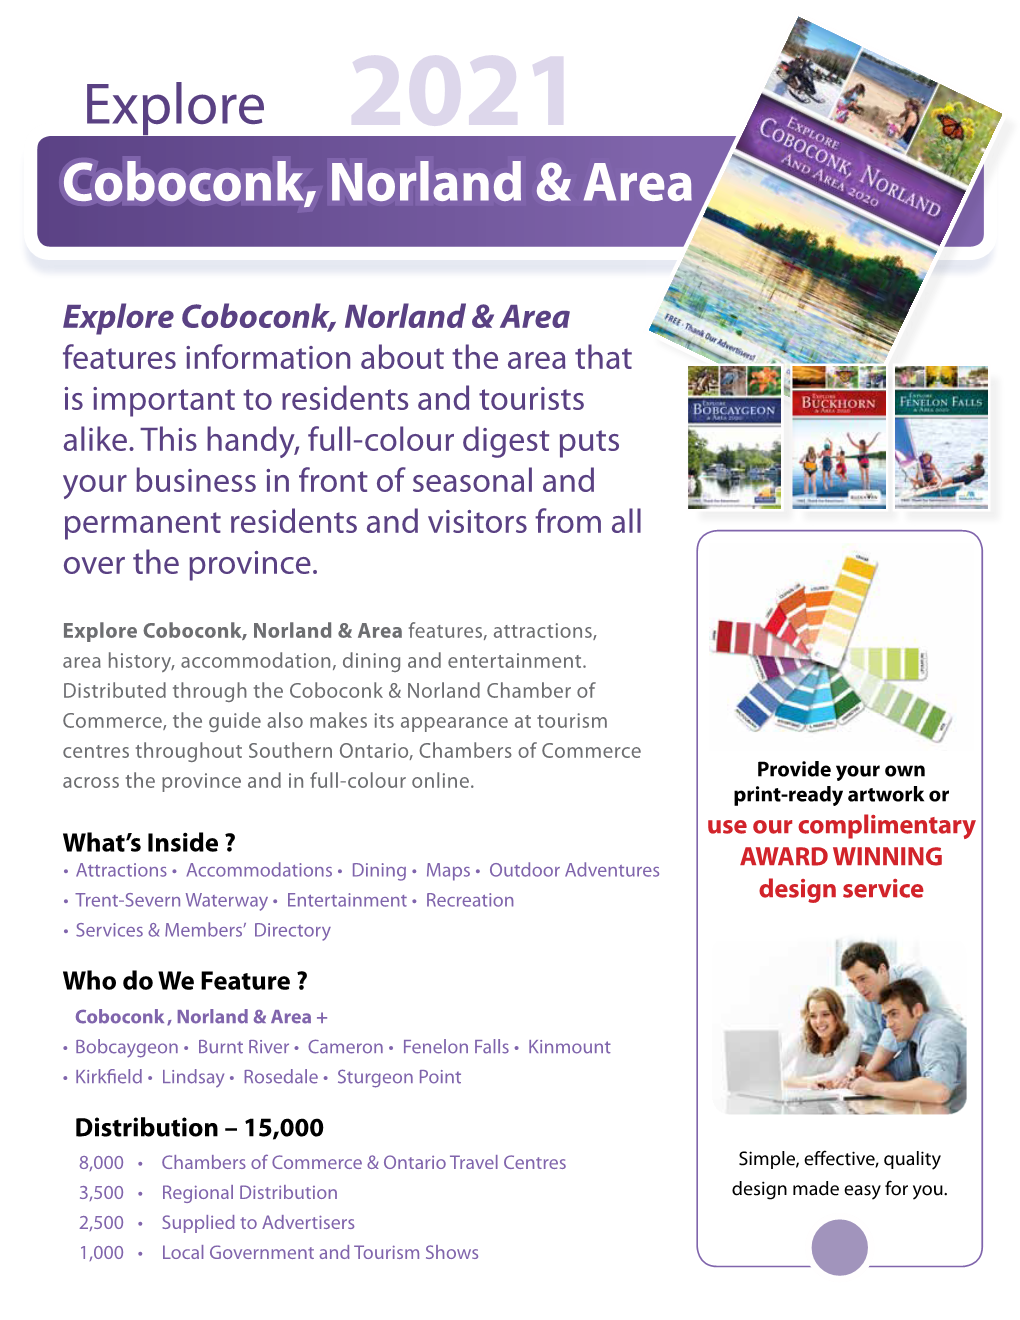 Explore 2021 Coboconk, Norland & Area